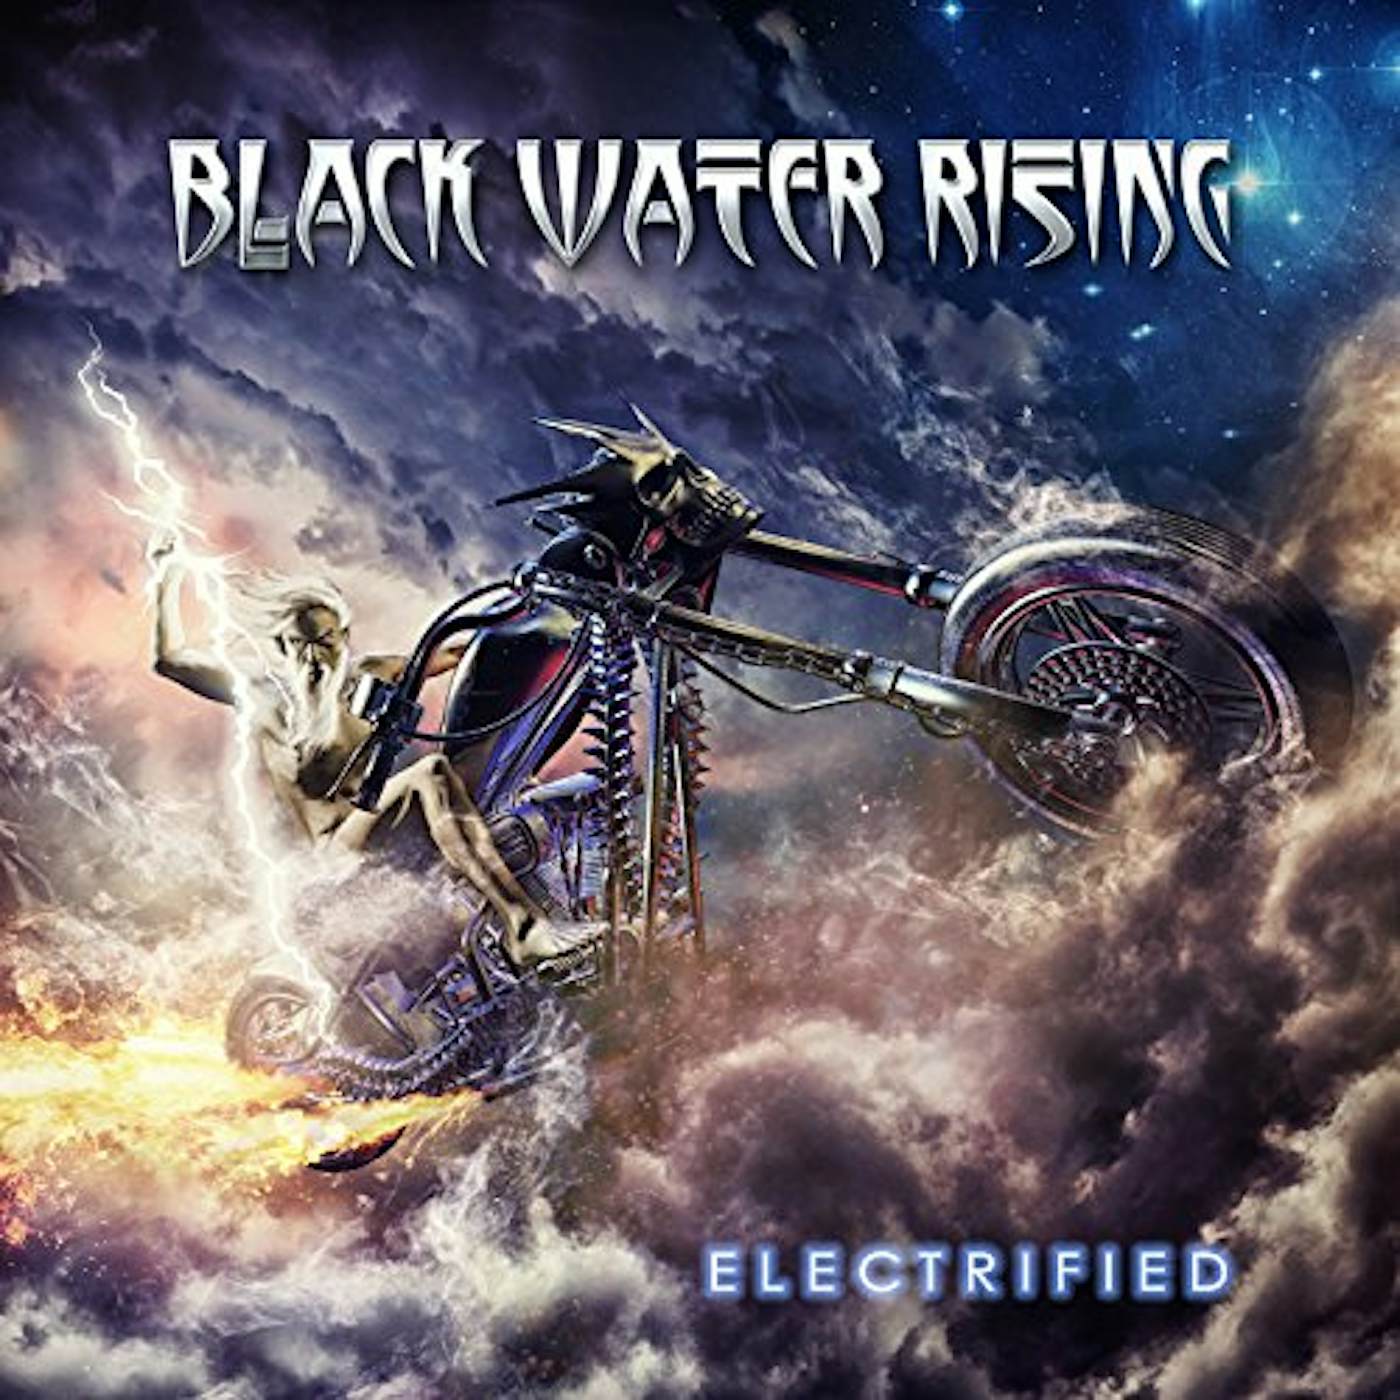 Black Water Rising ELECTRIFIED CD